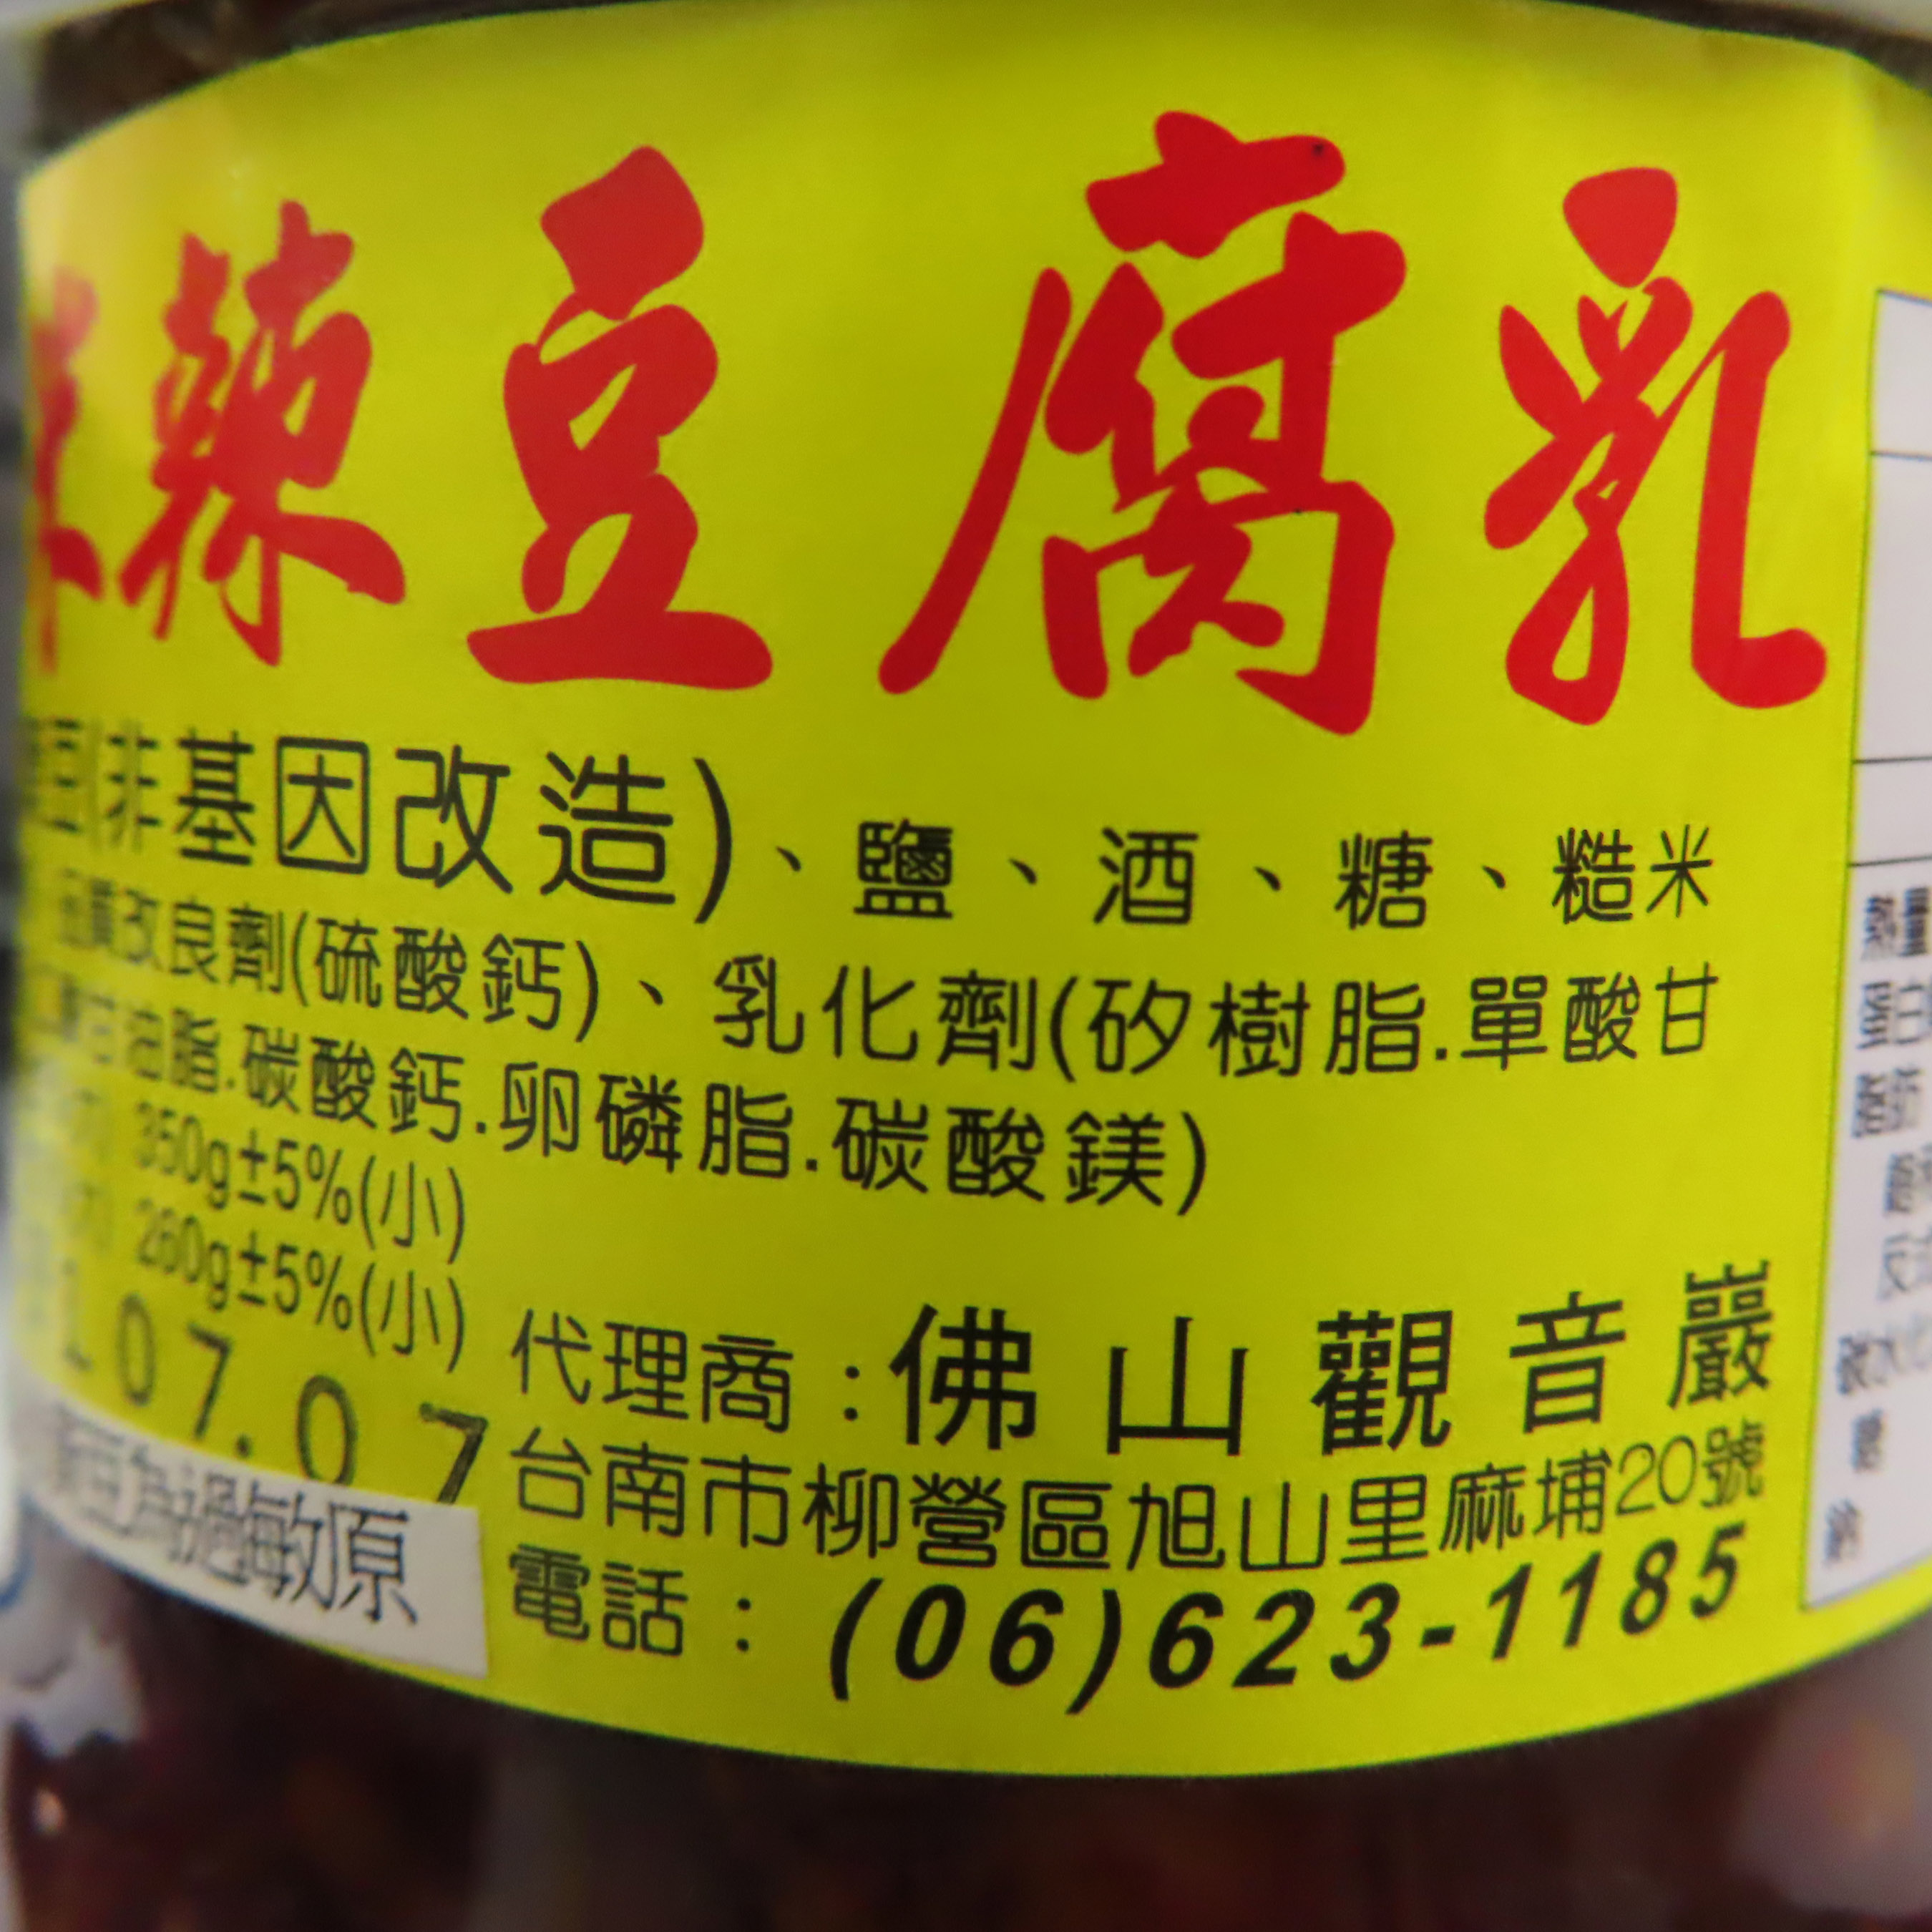 Image Bean Curd With Chili 佛山观音嚴 - 米辣豆腐乳 400grams